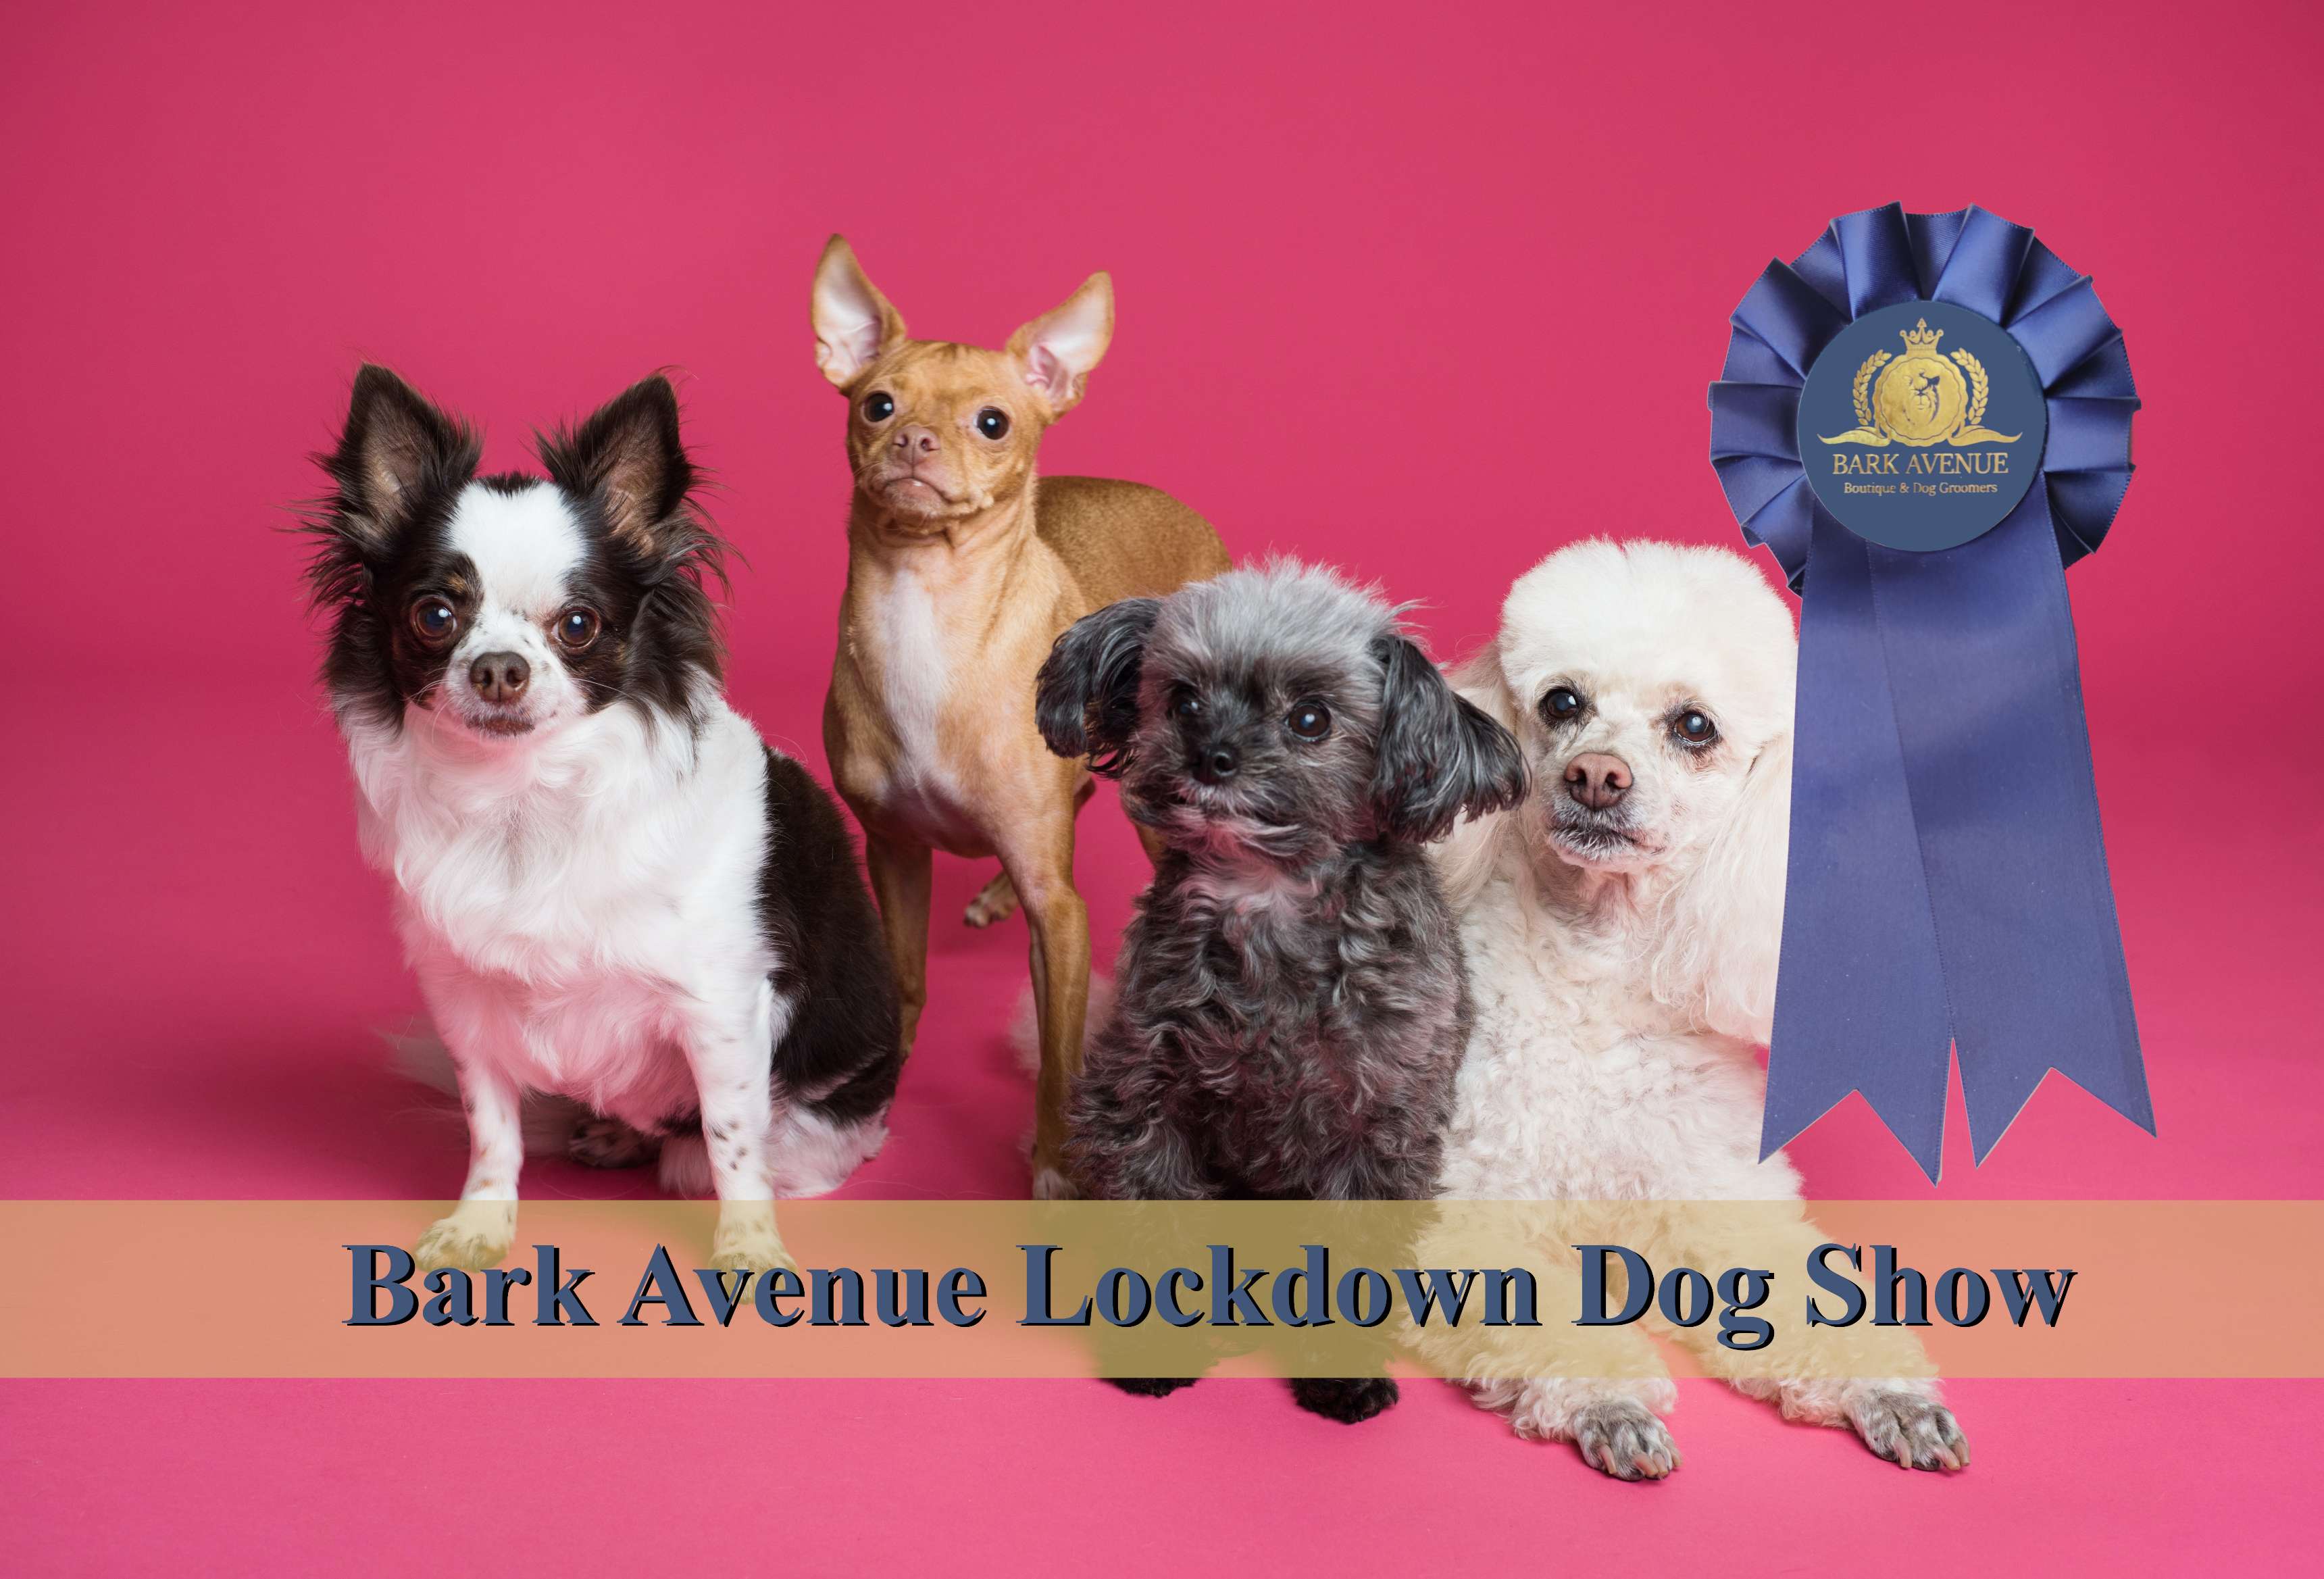 Lockdown Dog Show